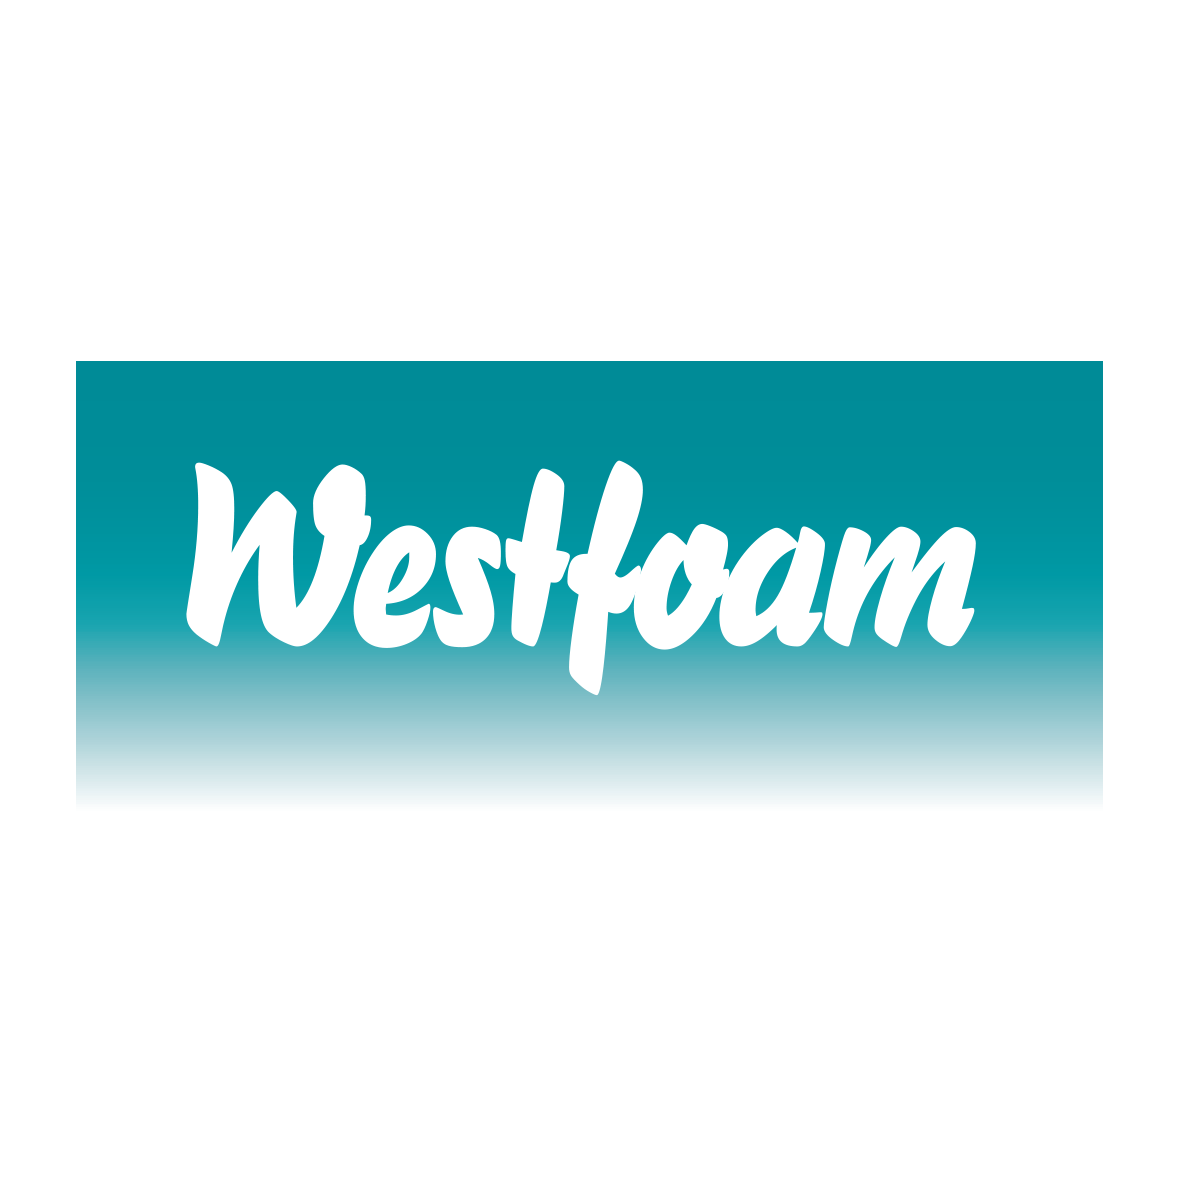 Westfoam Logo.png